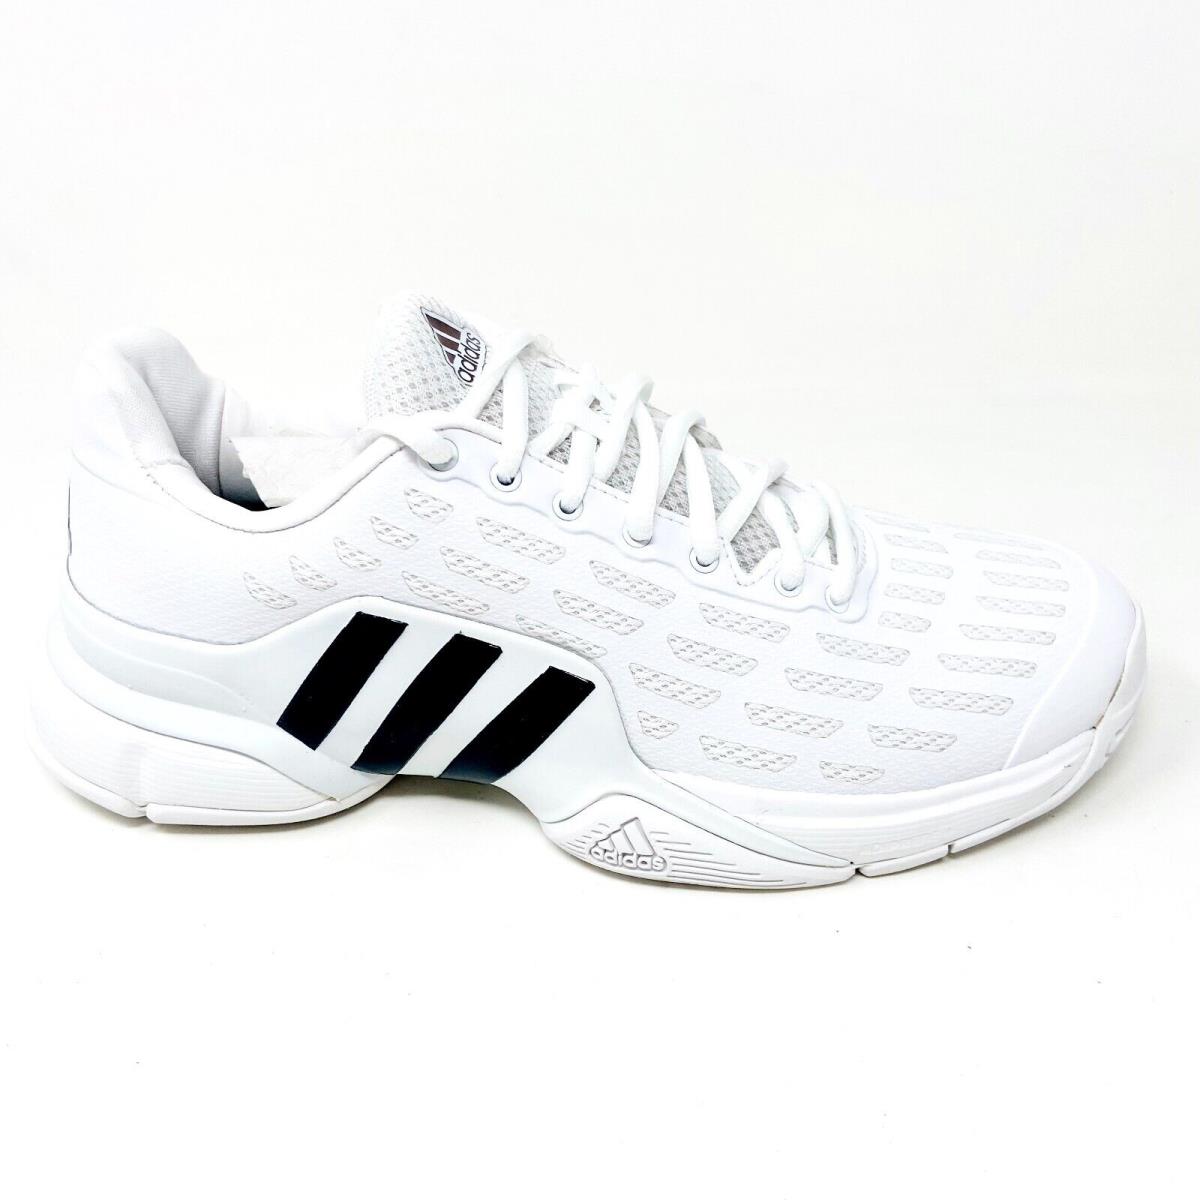 Adidas Barricade 2016 White Black Mens Size 7 Tennis Shoes AQ2255